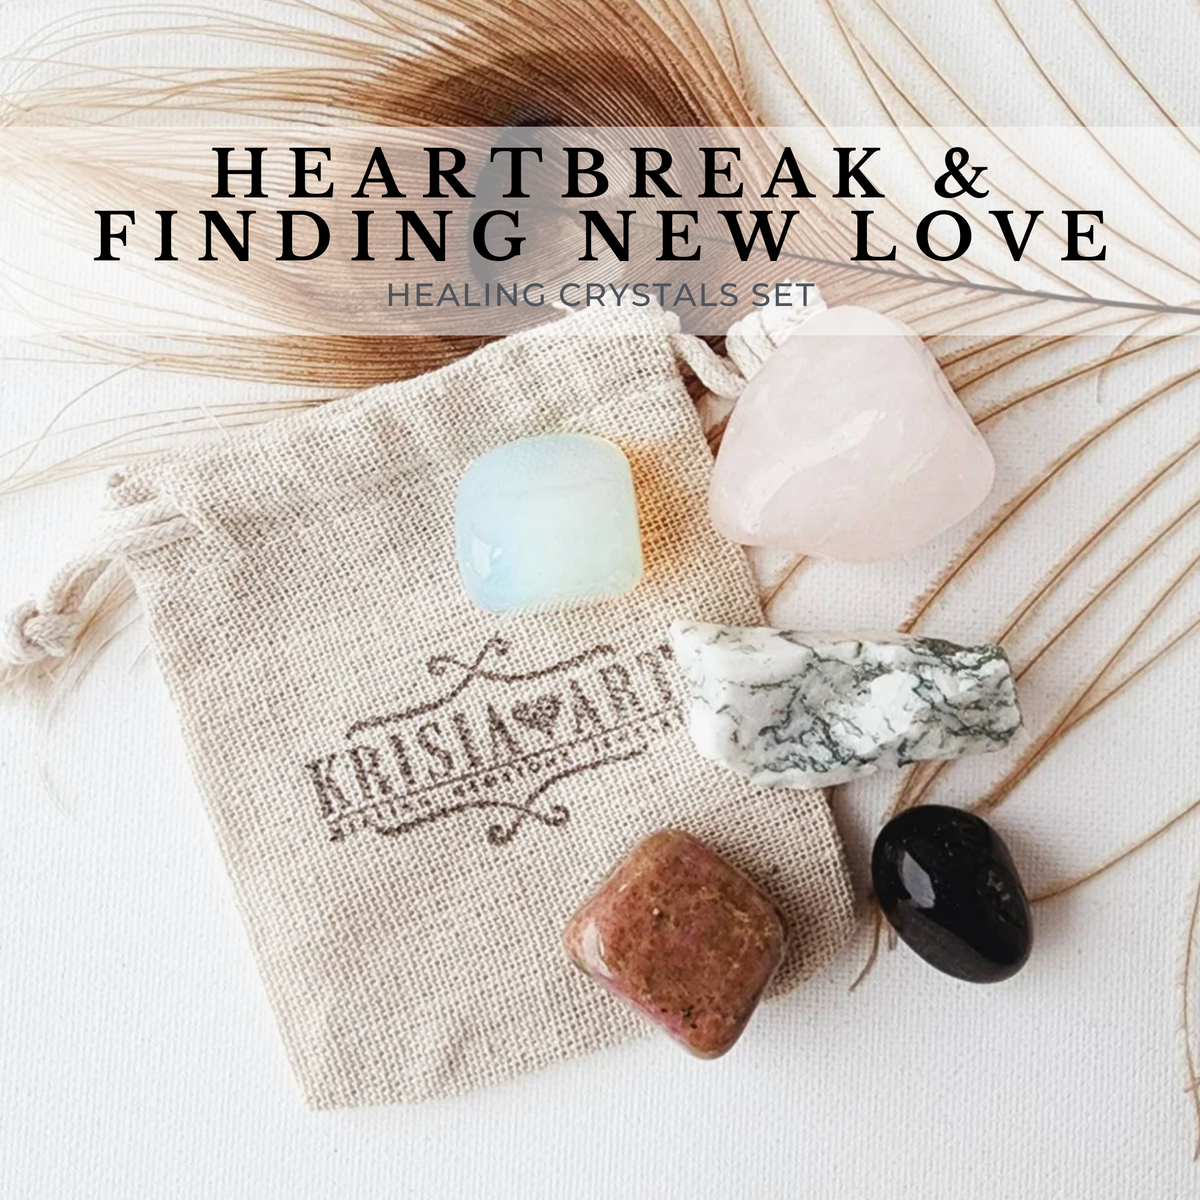 HEARTBREAK & FINDING NEW LOVE crystal set for attracting soulmate, boyfriend/girlfriend, romance. Rhodonite, Opalite, Tree Agate, Rose Quartz, and Black Onyx. 